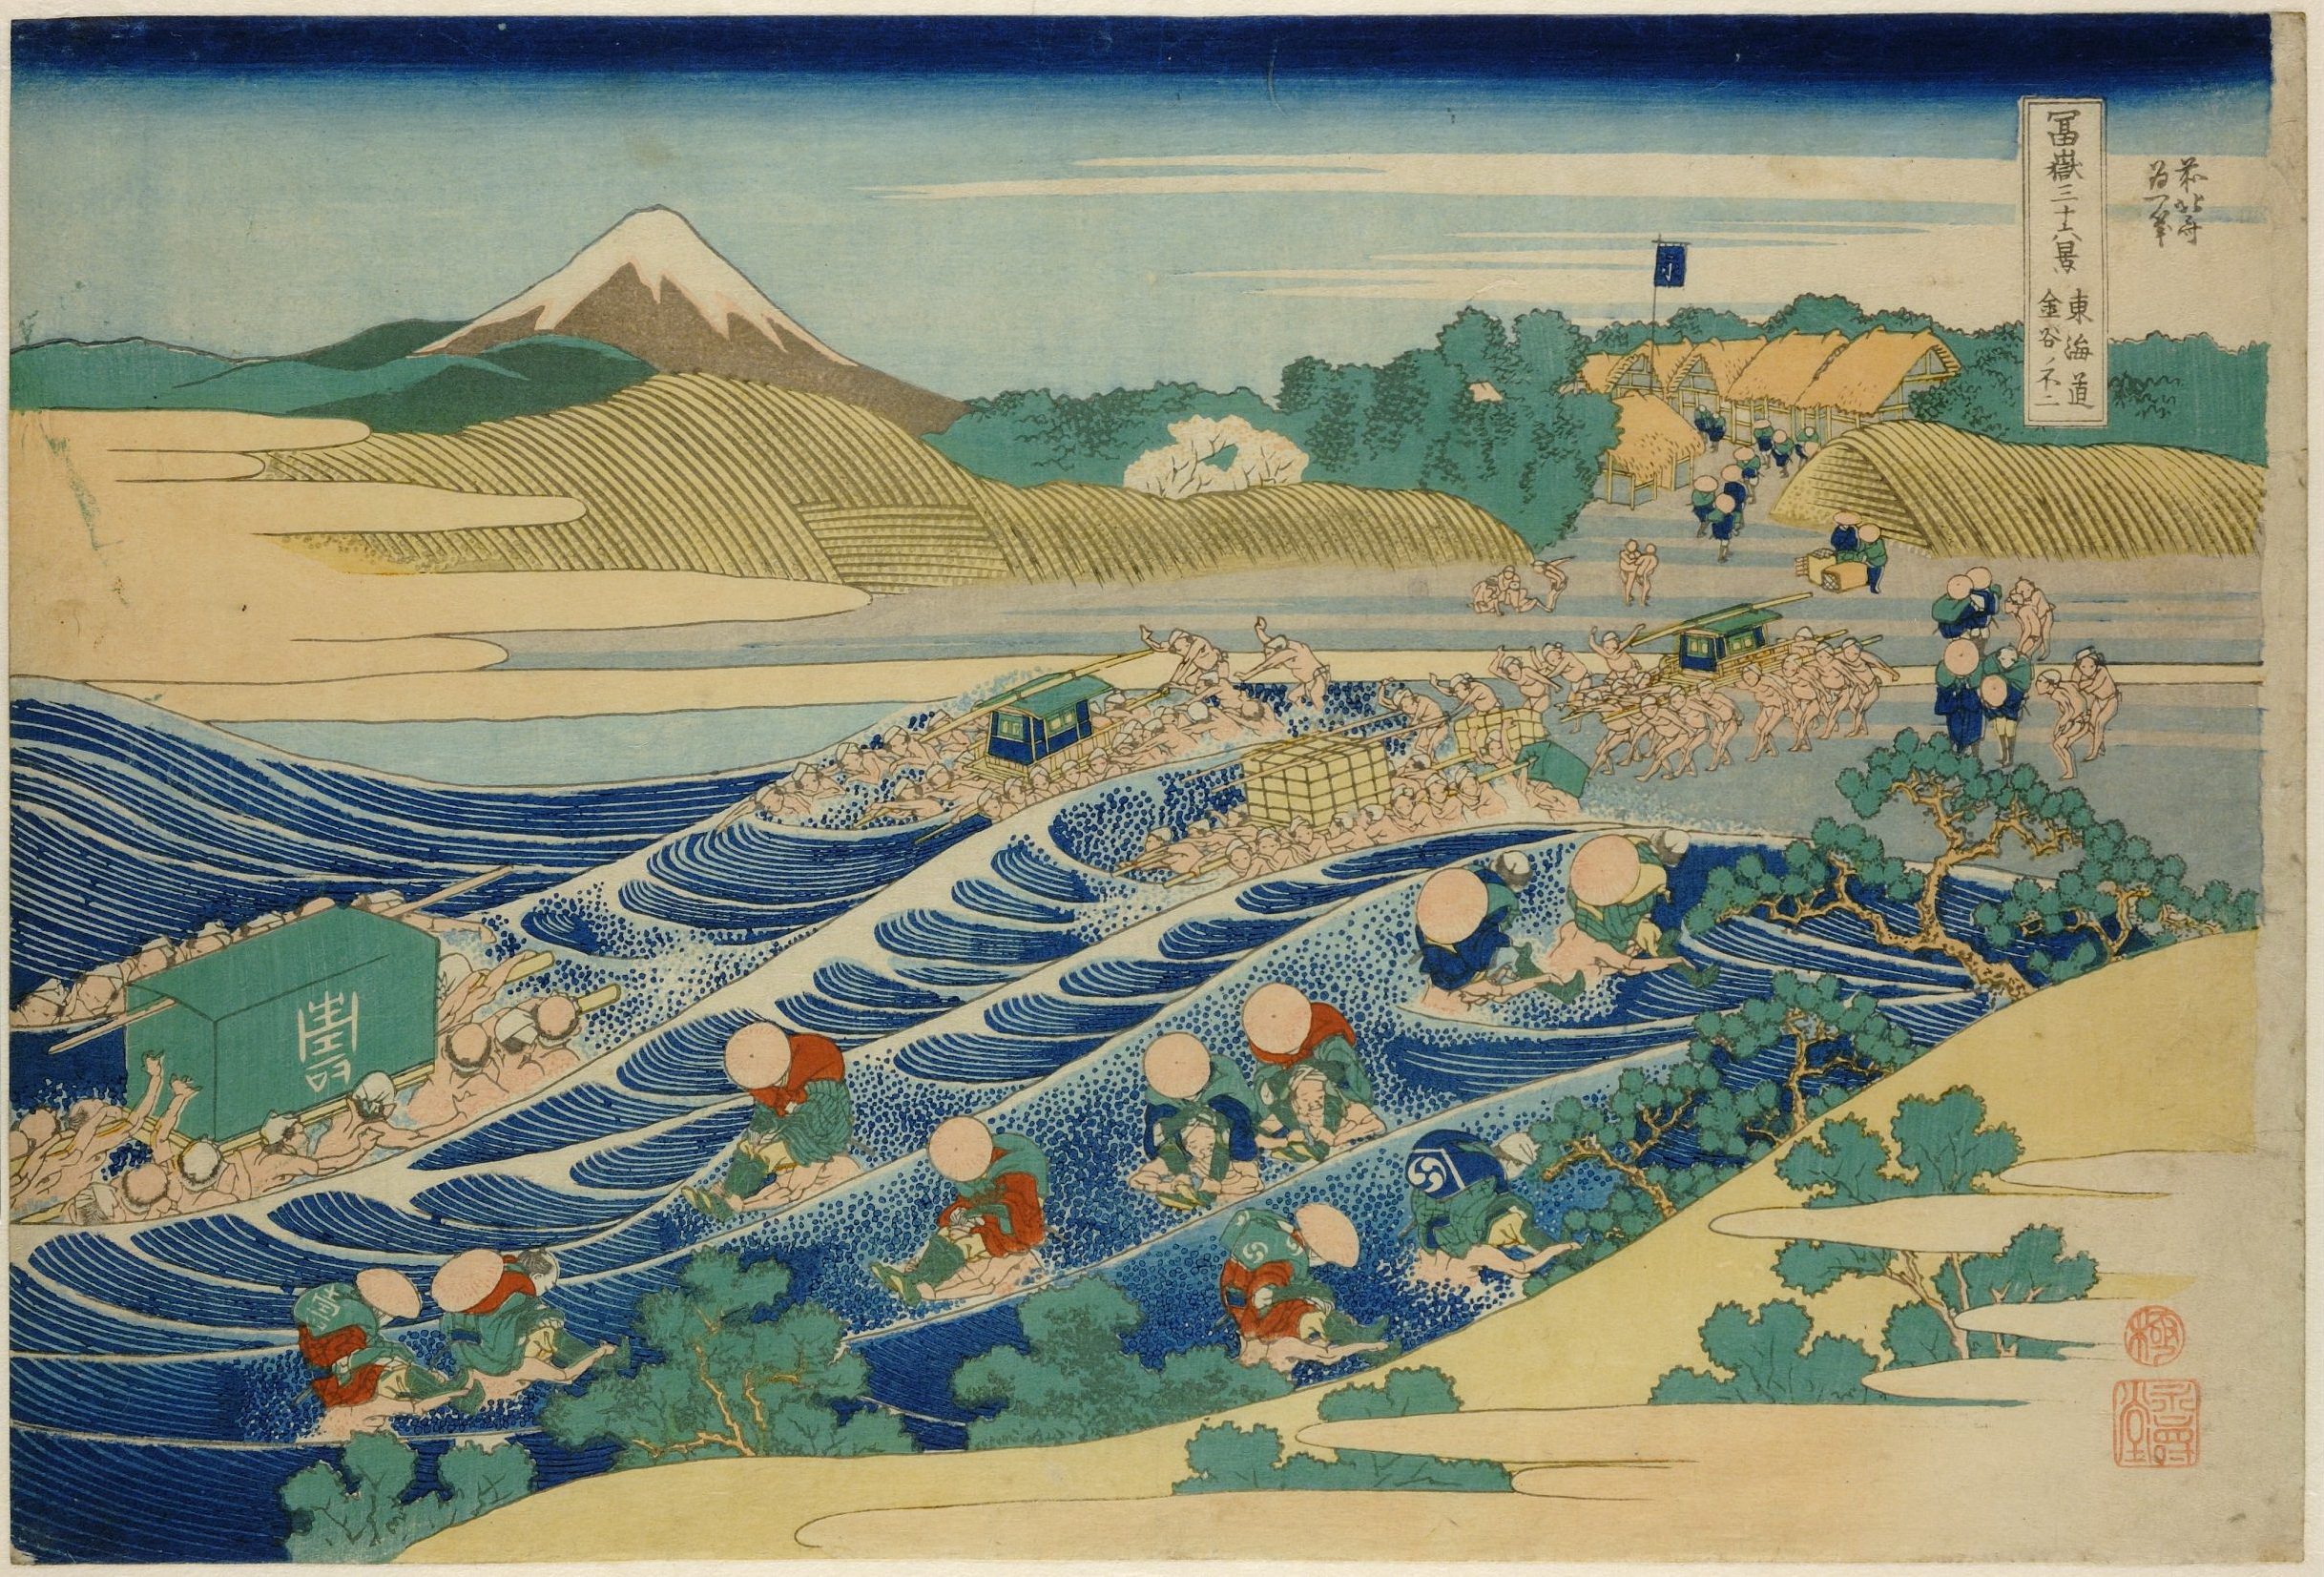 Katsushika Hokusai. Fuji Seen from Kanaya on the Tōkaidō, from the series Thirty-six Views of Mount Fuji